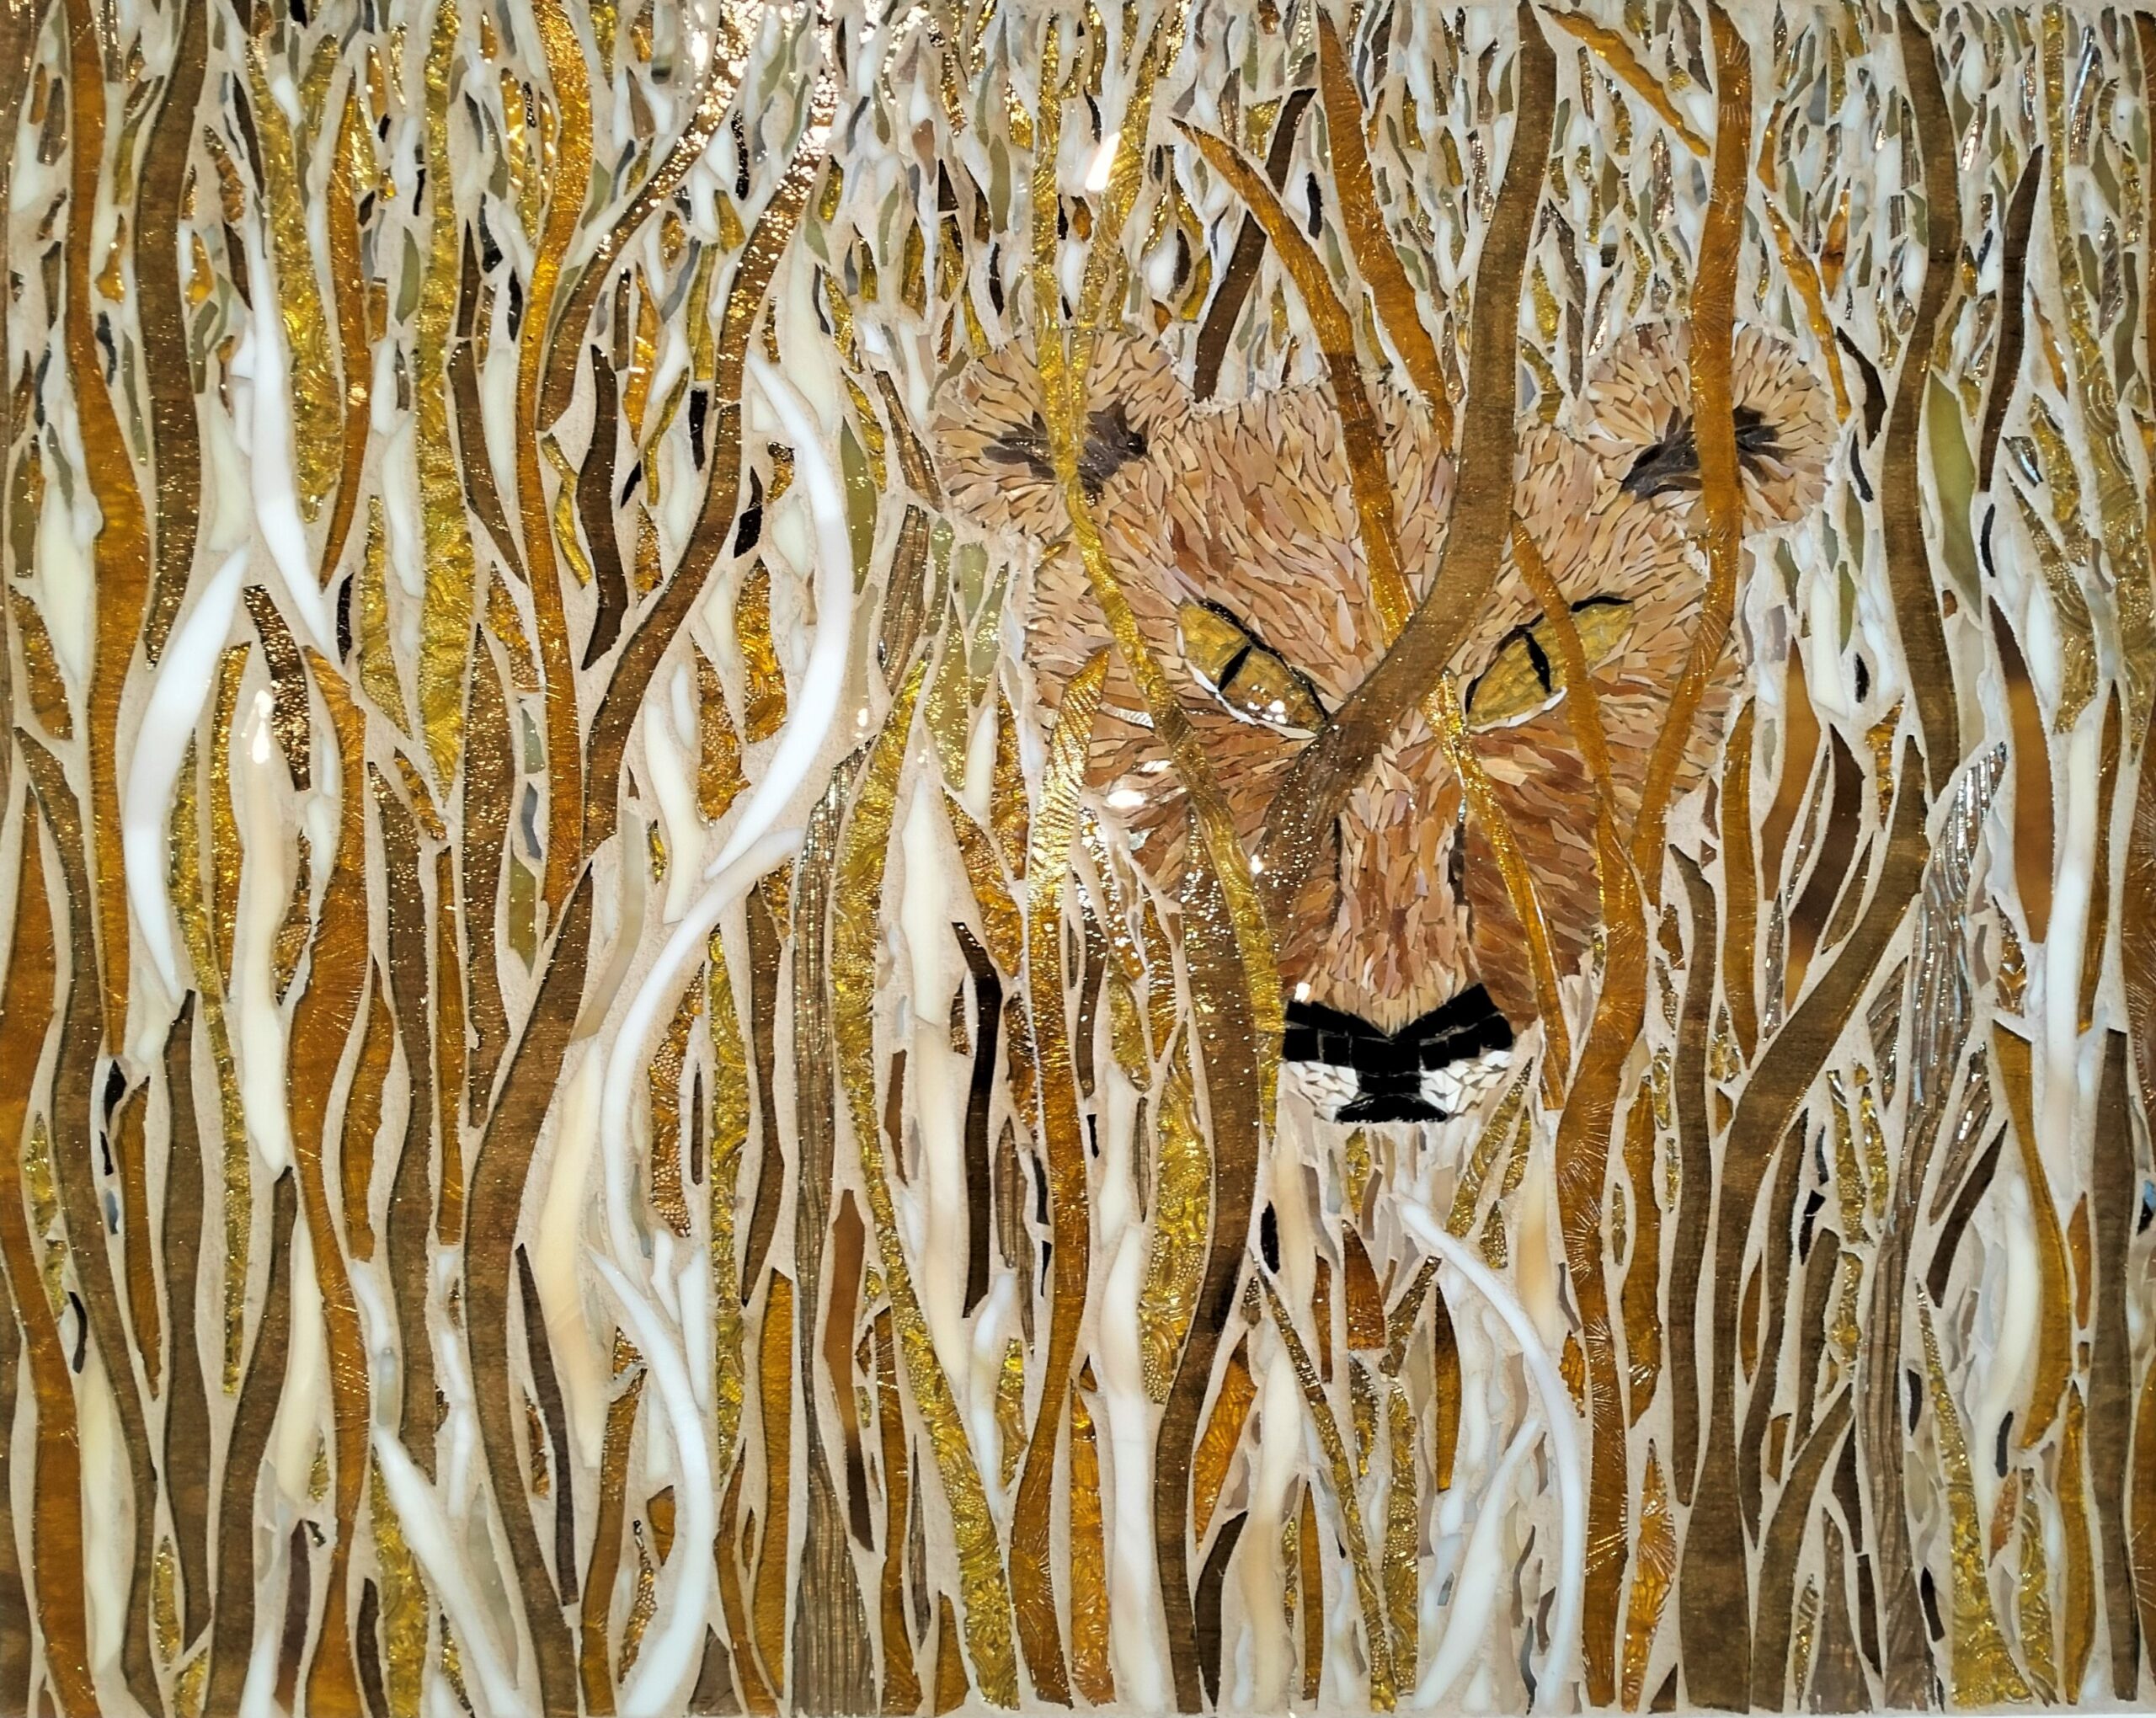 Laying in Wait by mosaic Tasmanian artist Yvette Hallam in her Artist Profile